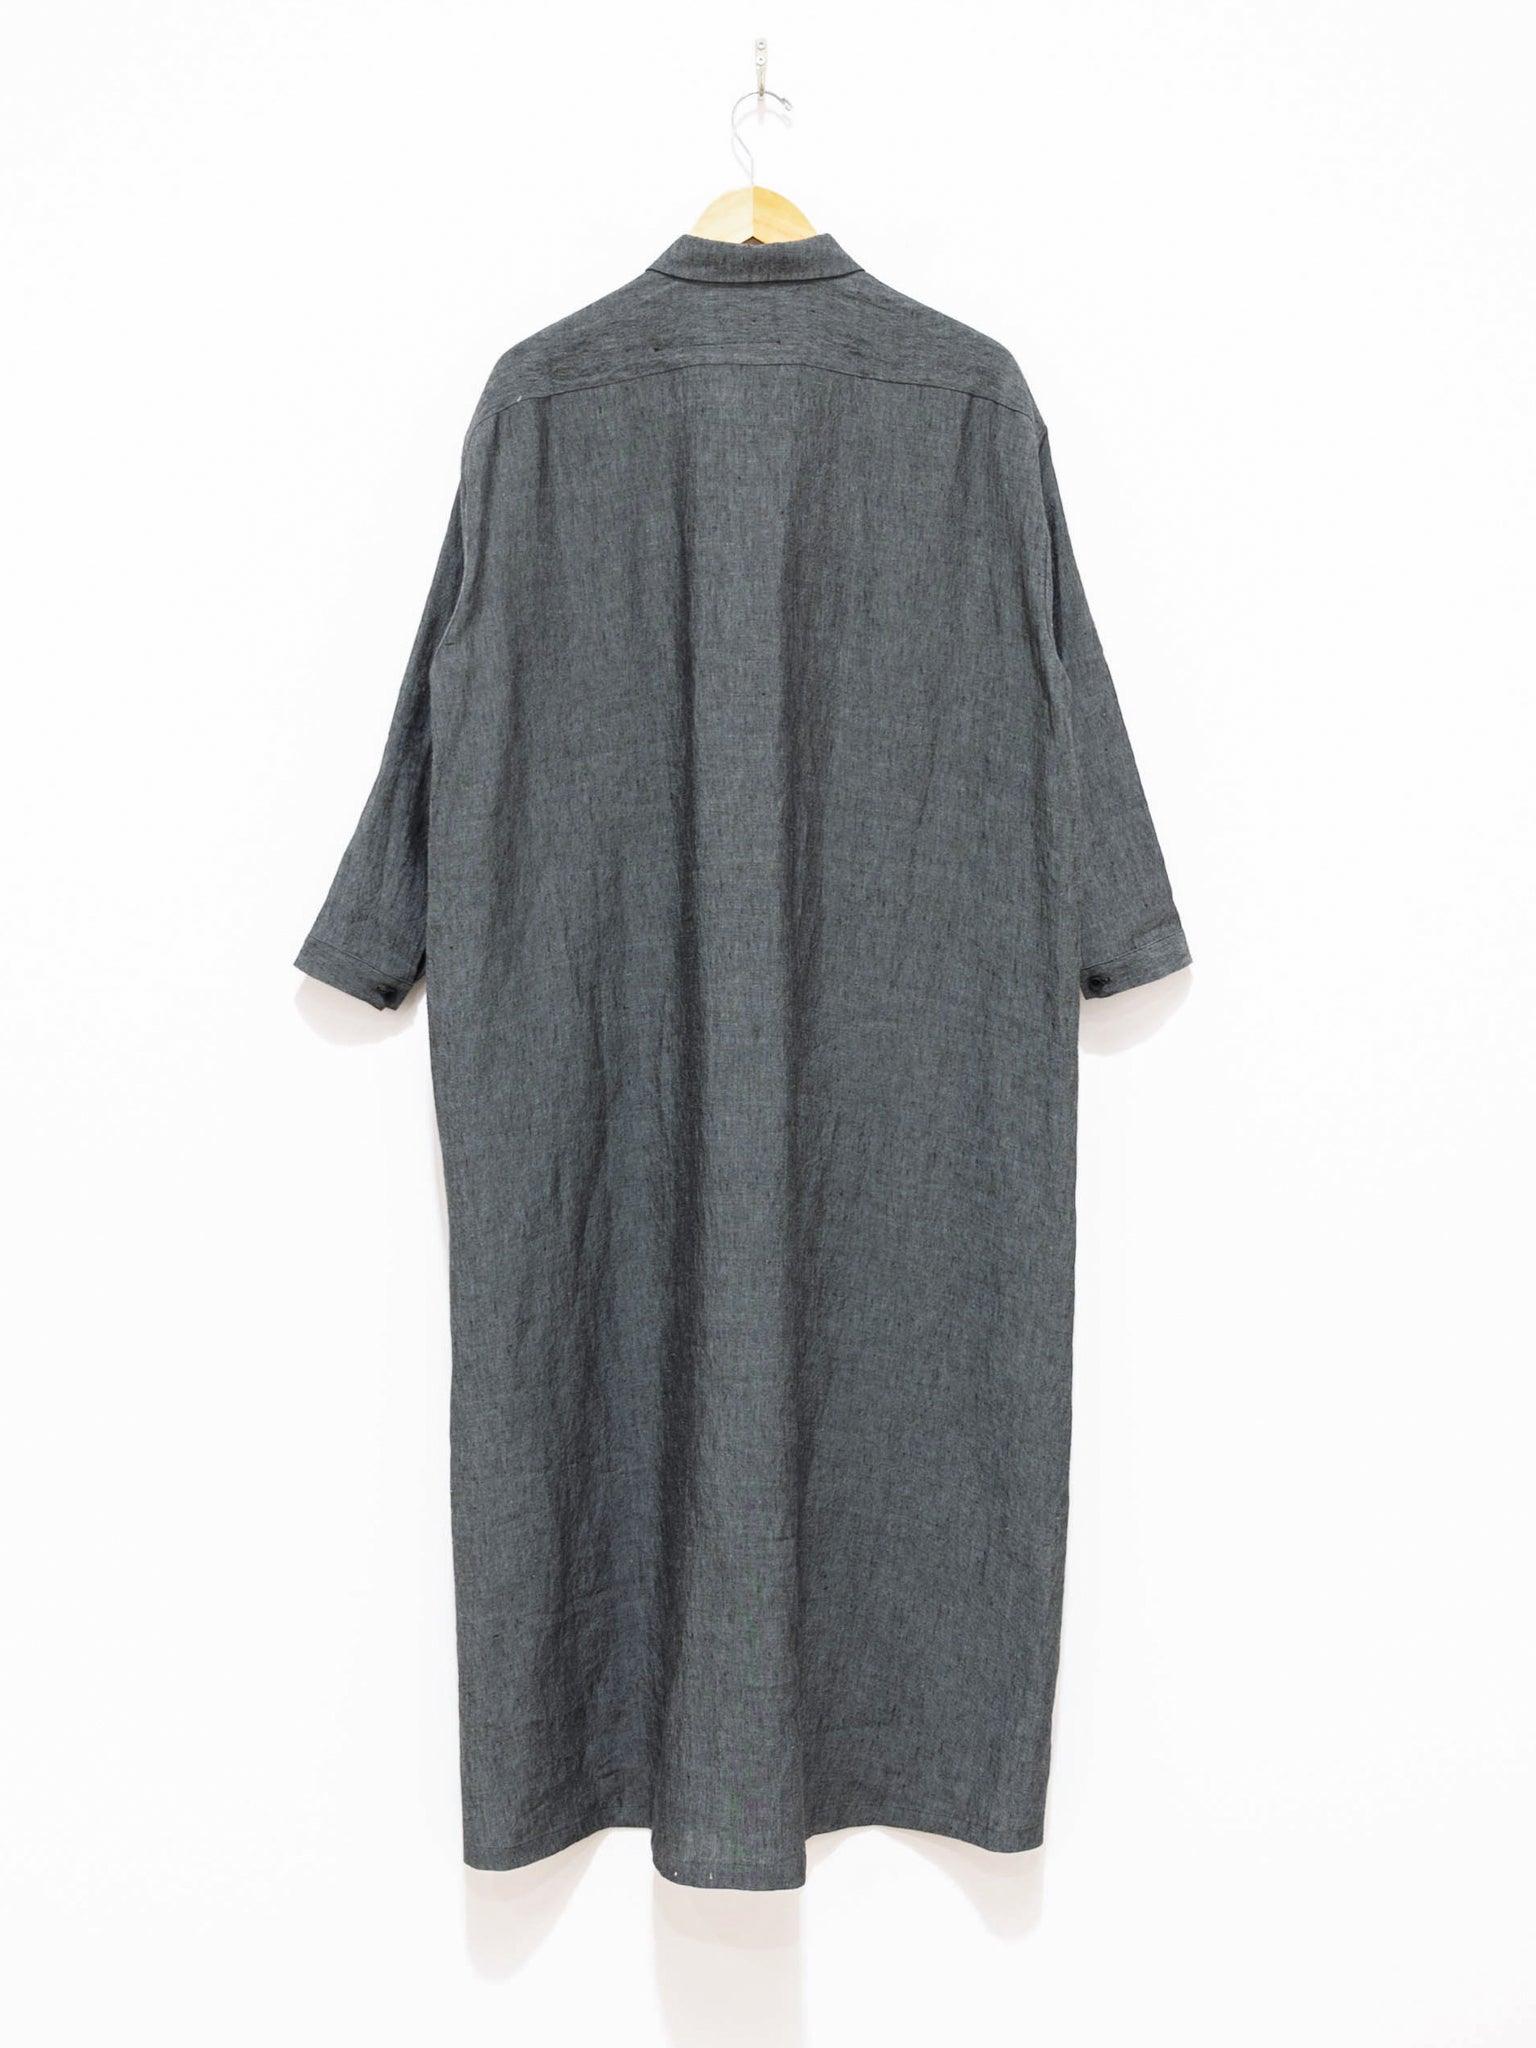 Namu Shop - Toogood The Draughtsman Dress - Blue Slate Laundered Linen